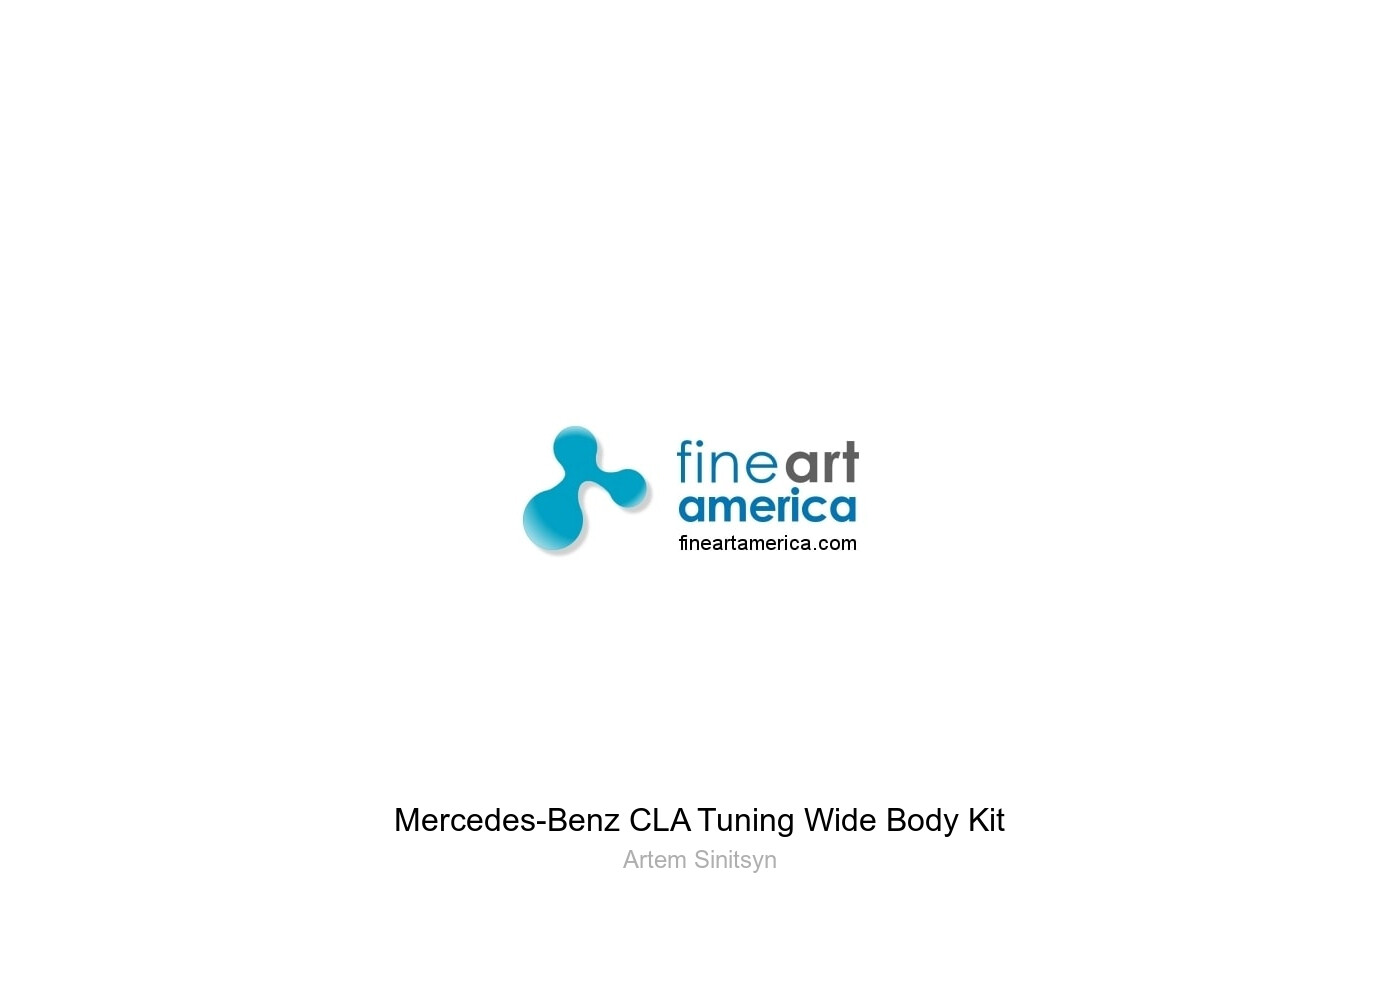 https://render.fineartamerica.com/images/rendered/backview/greeting-card/blank.jpg?artistName=Artem+Sinitsyn&artworkName=Mercedes-Benz+CLA+Tuning+Wide+Body+Kit&orientation=0&memberIdType=artistid&memberId=526779&domainName=fineartamerica.com